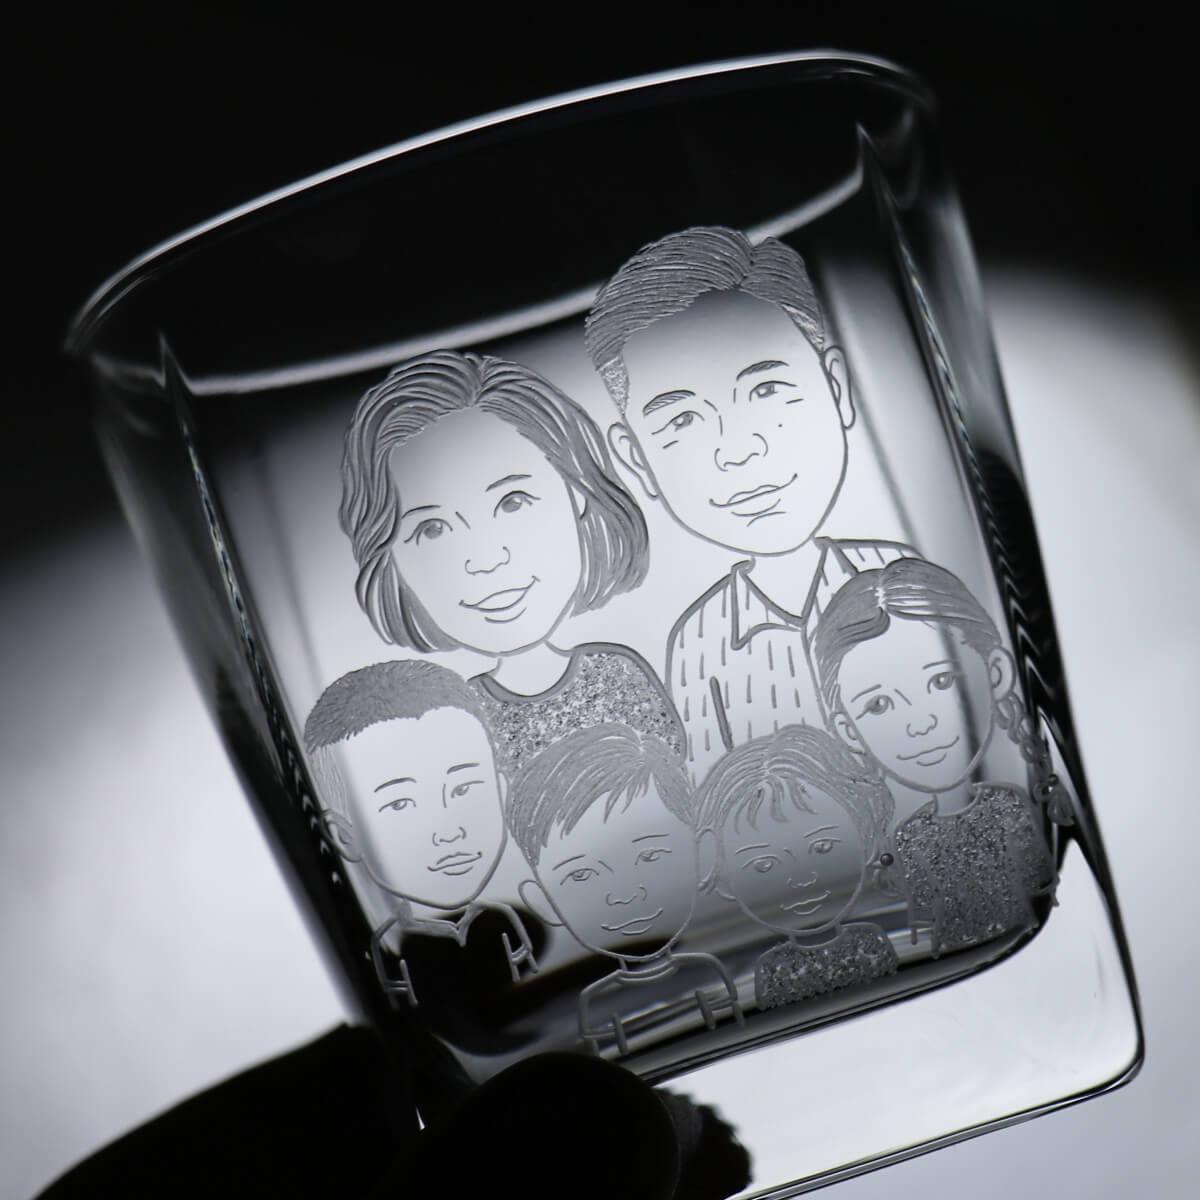 295cc【全家福】(6人Q版)一家人幸福時刻 肖像客製威士忌杯 - MSA玻璃雕刻